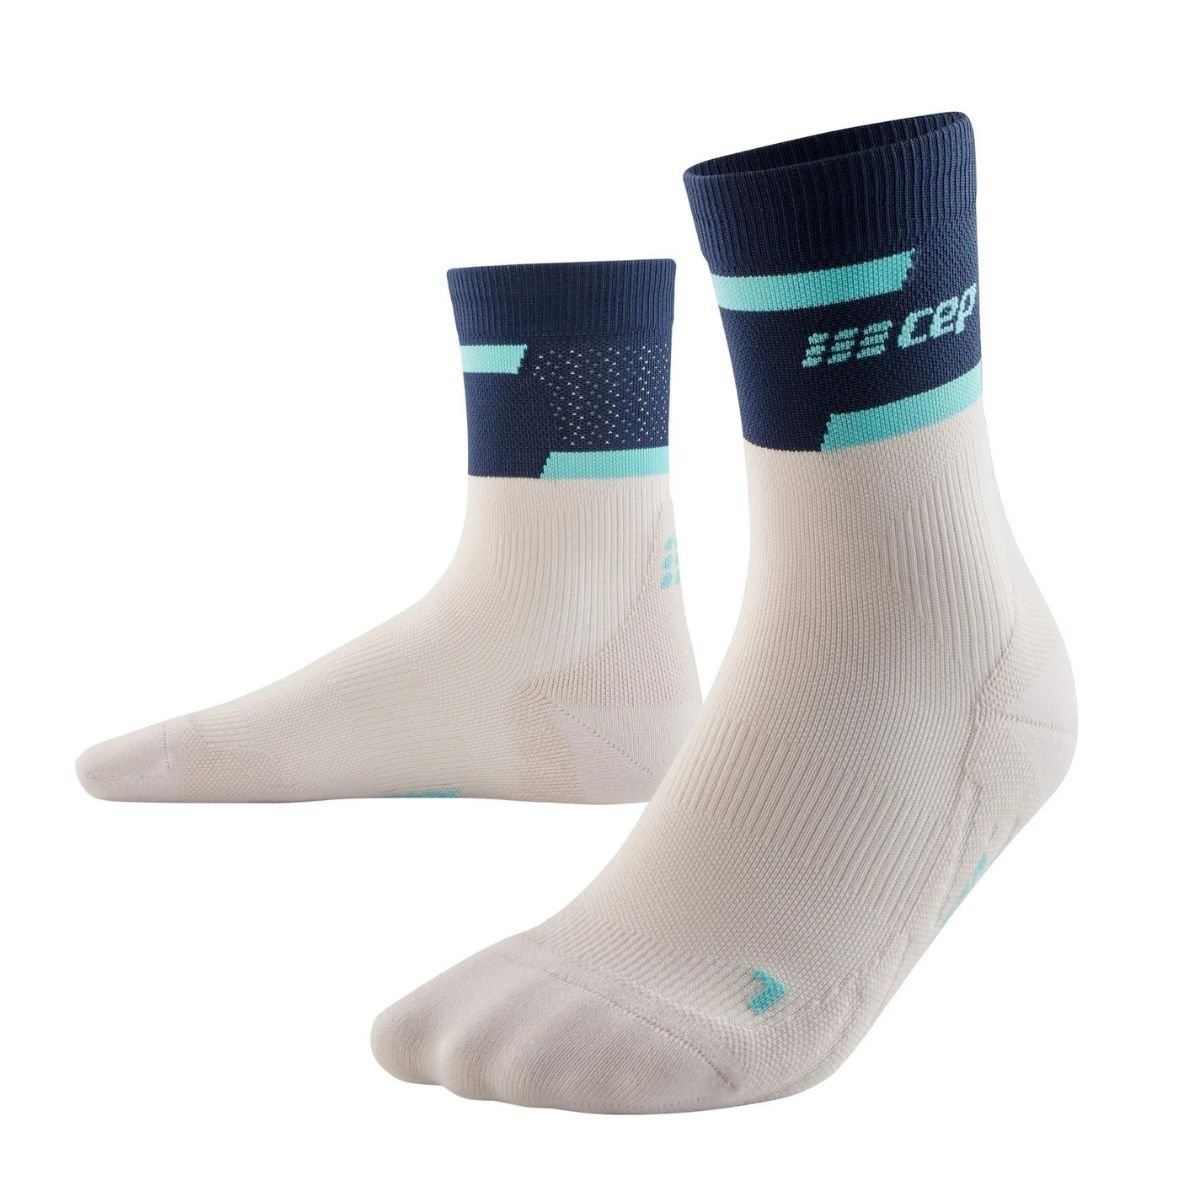 Ponožky CEP 4.0 W - biela